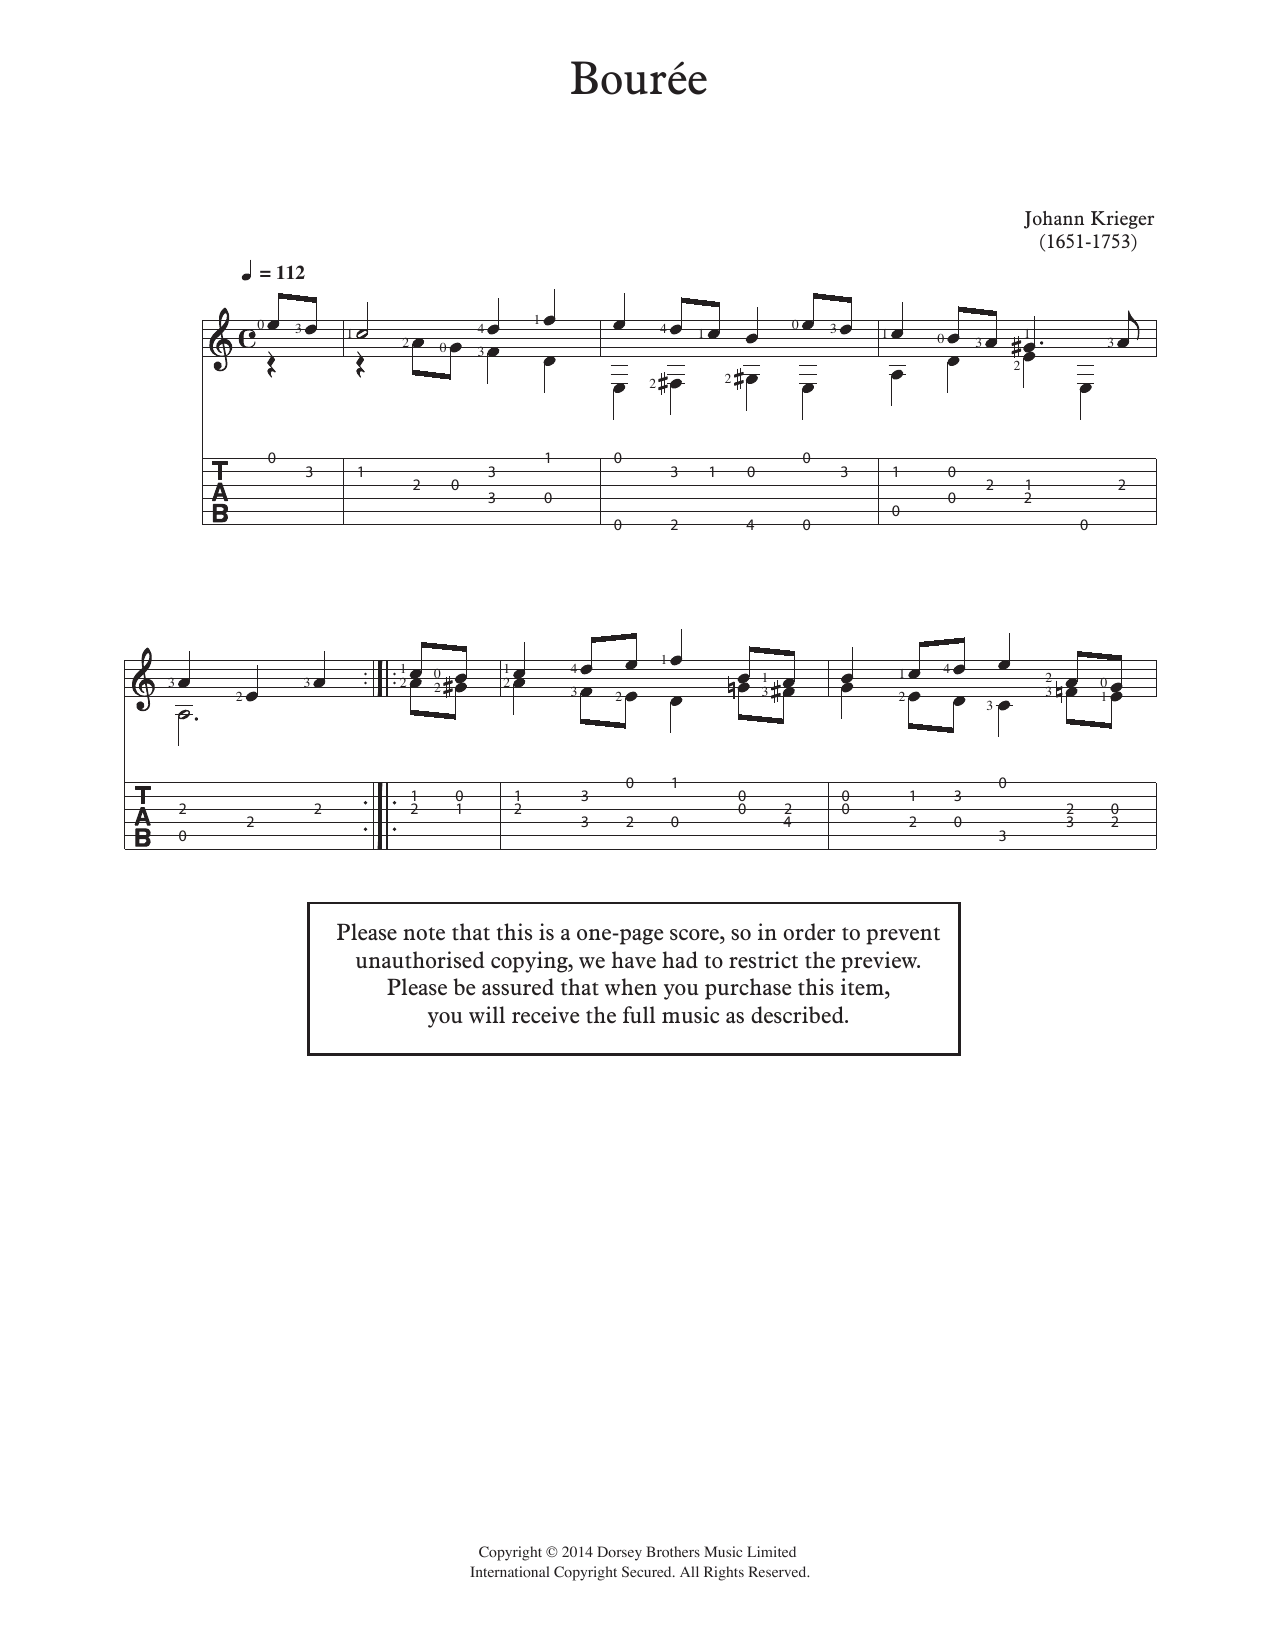 Johann Philipp Krieger Bouree Sheet Music Notes & Chords for Guitar - Download or Print PDF